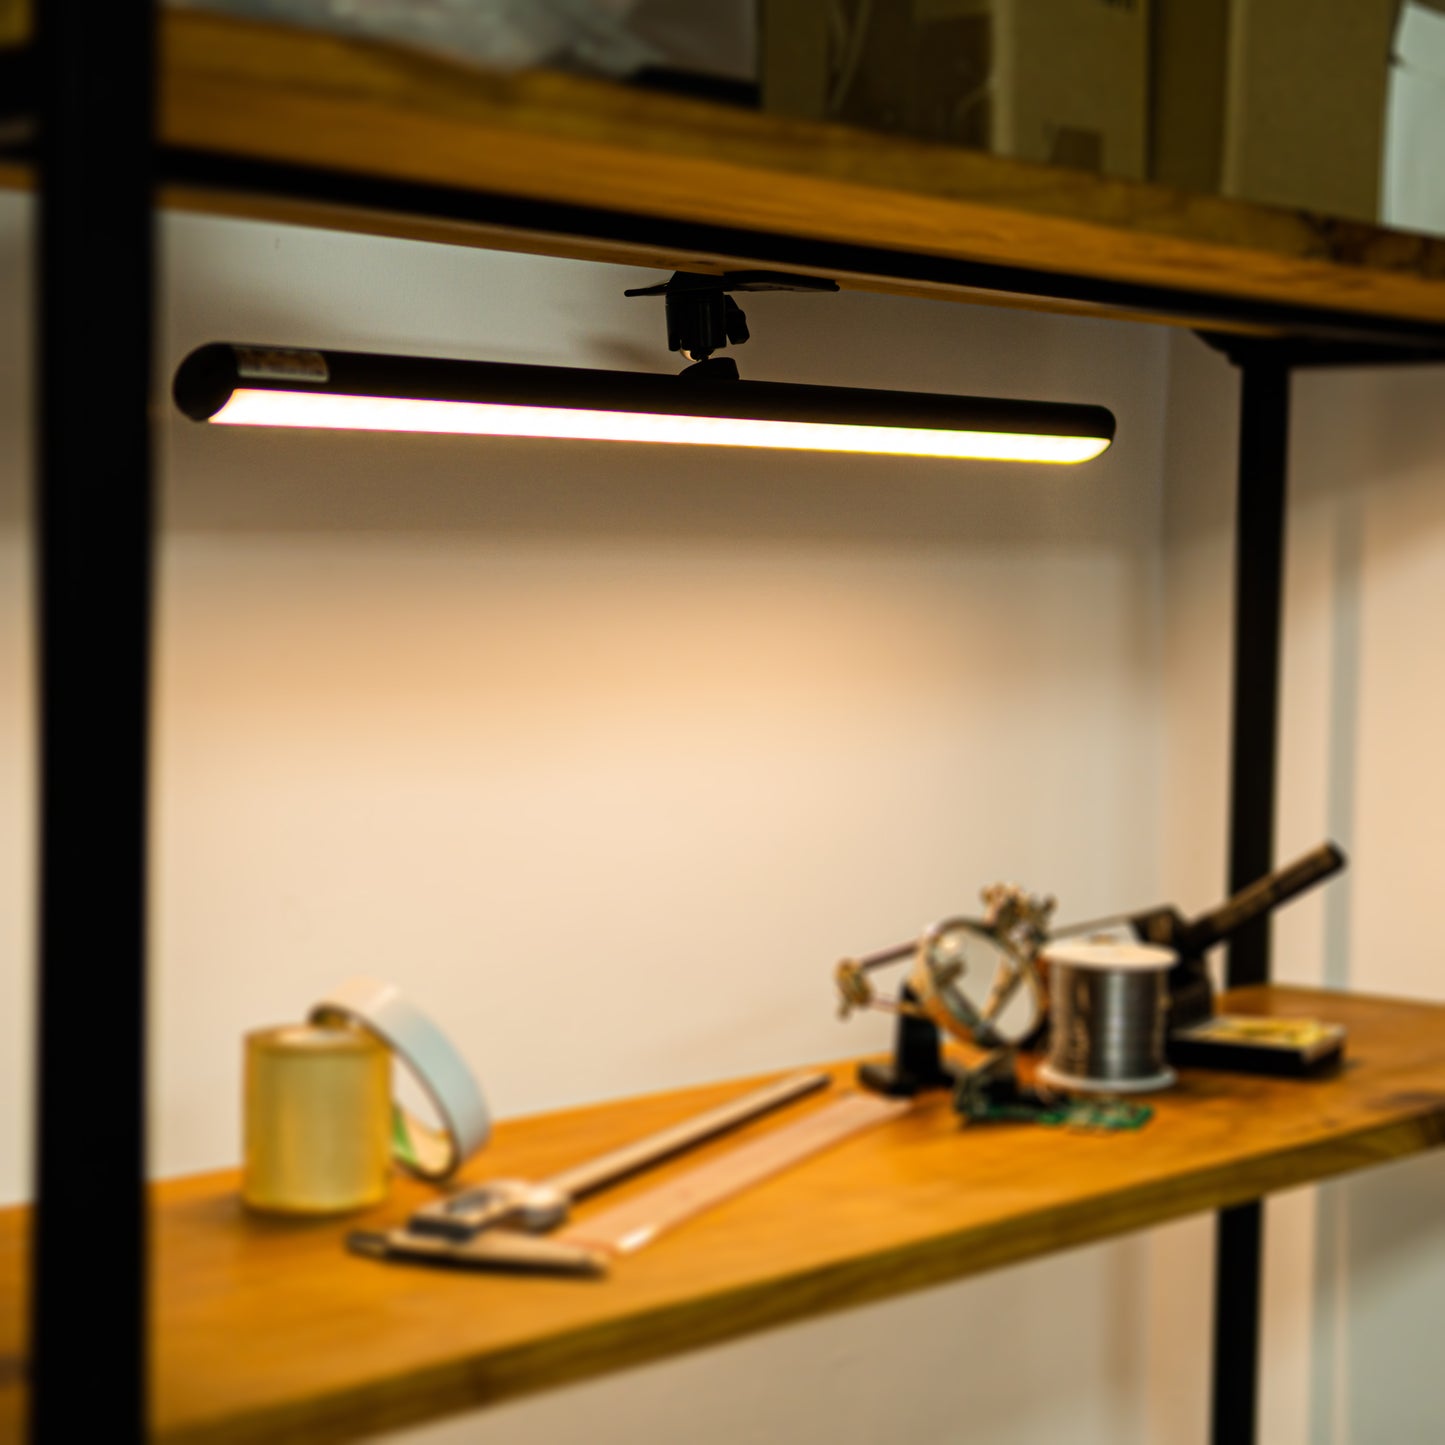 FSLiving パネルLEDライト 看板用 黒板用照明 10段階調光 調色 LEDクリップライト  読書ライト LEDライト 電気スタンド